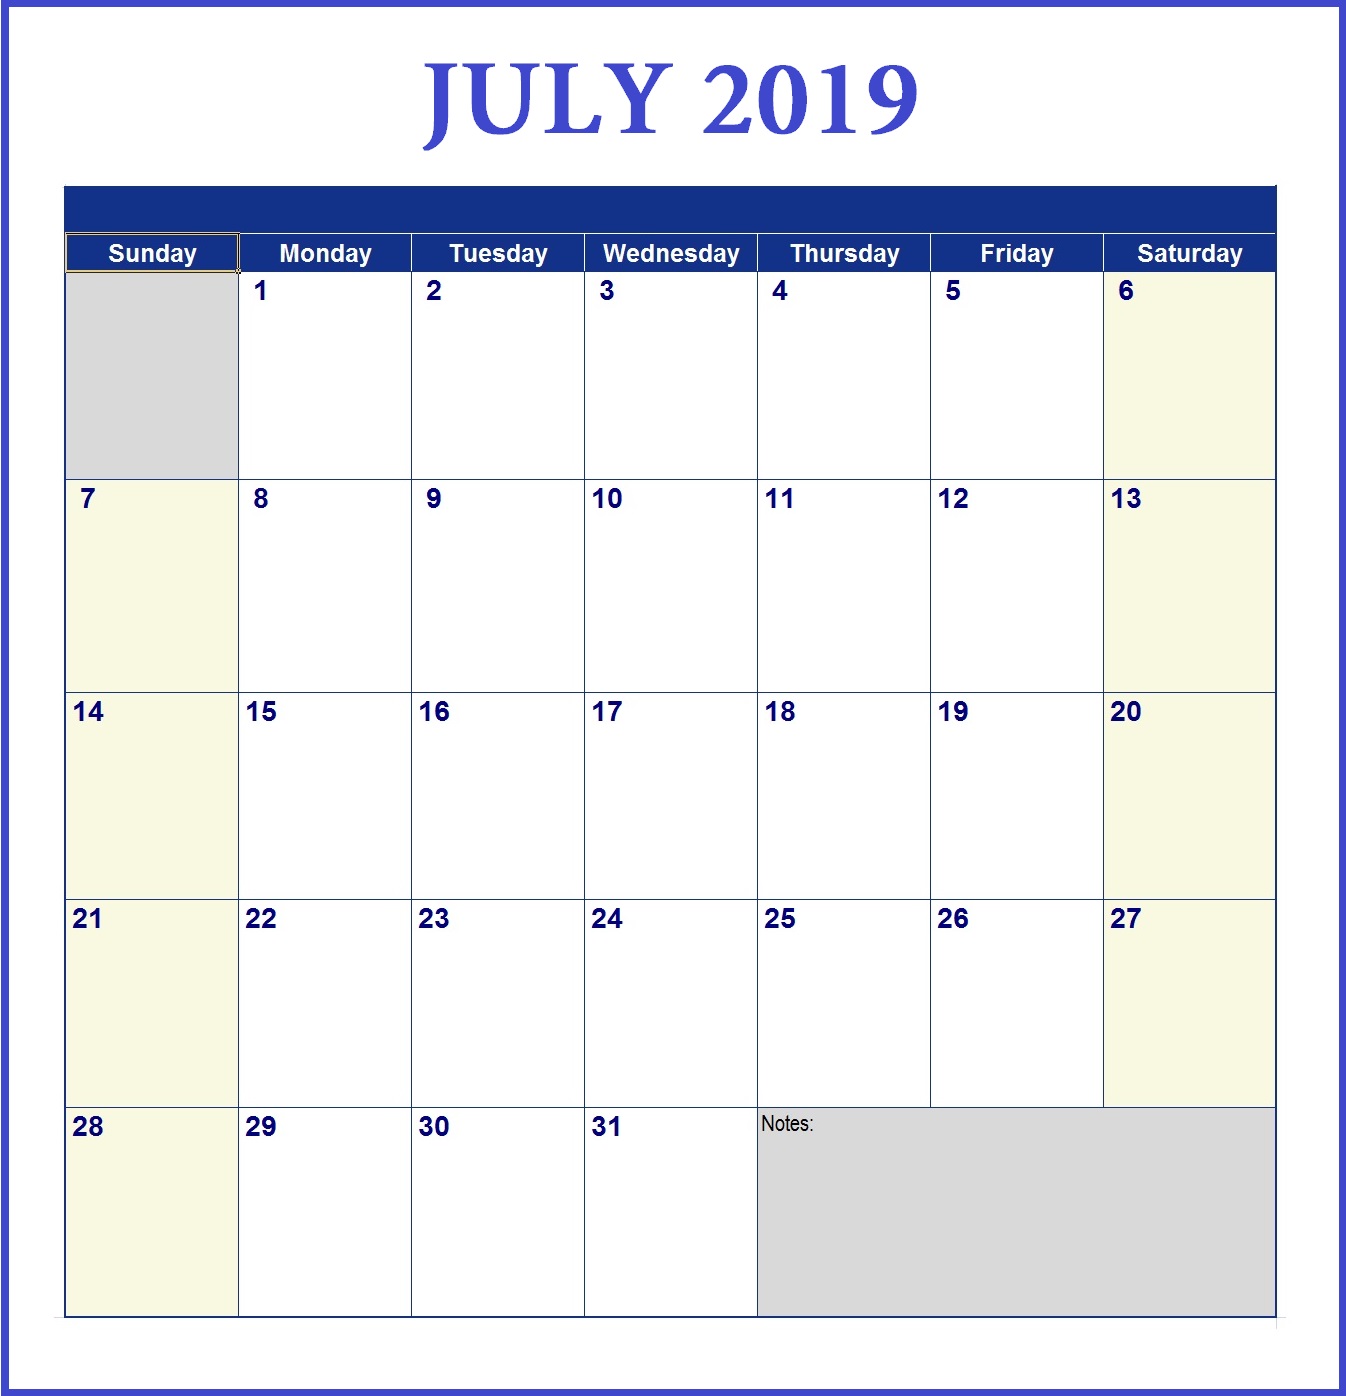 july-2019-calendar-word